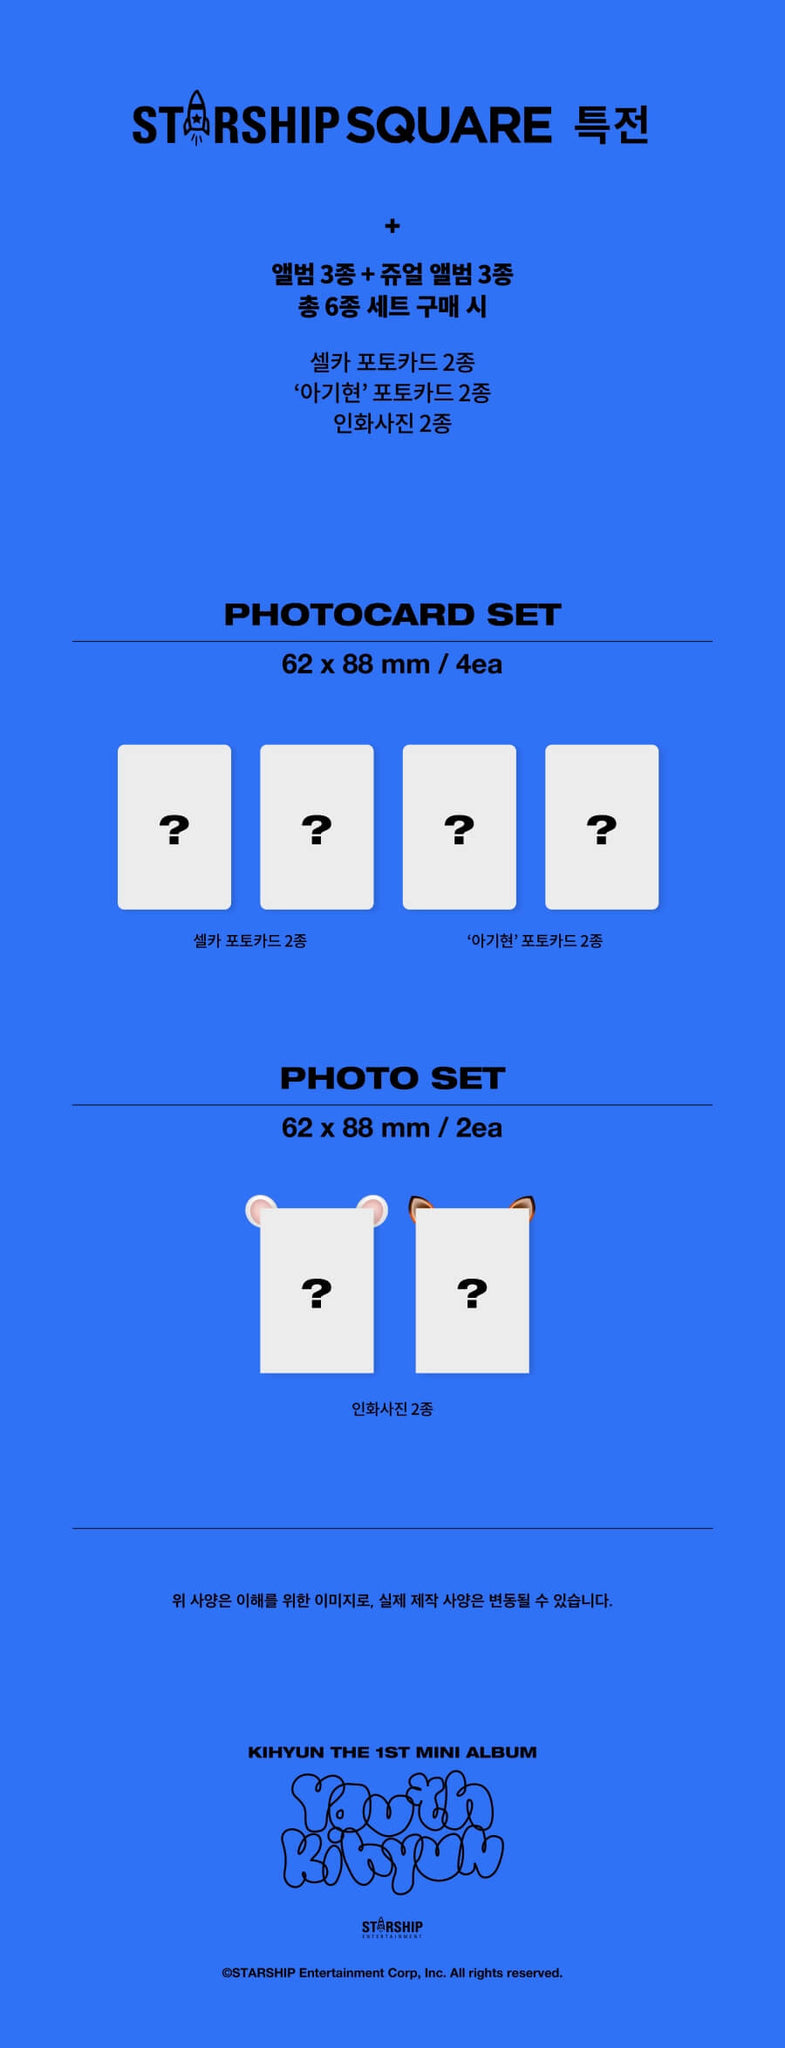 Kihyun 1st Mini Album YOUTH (Jewel Ver.) Inclusions Starship Square Benefit Photocard Set Photo Set